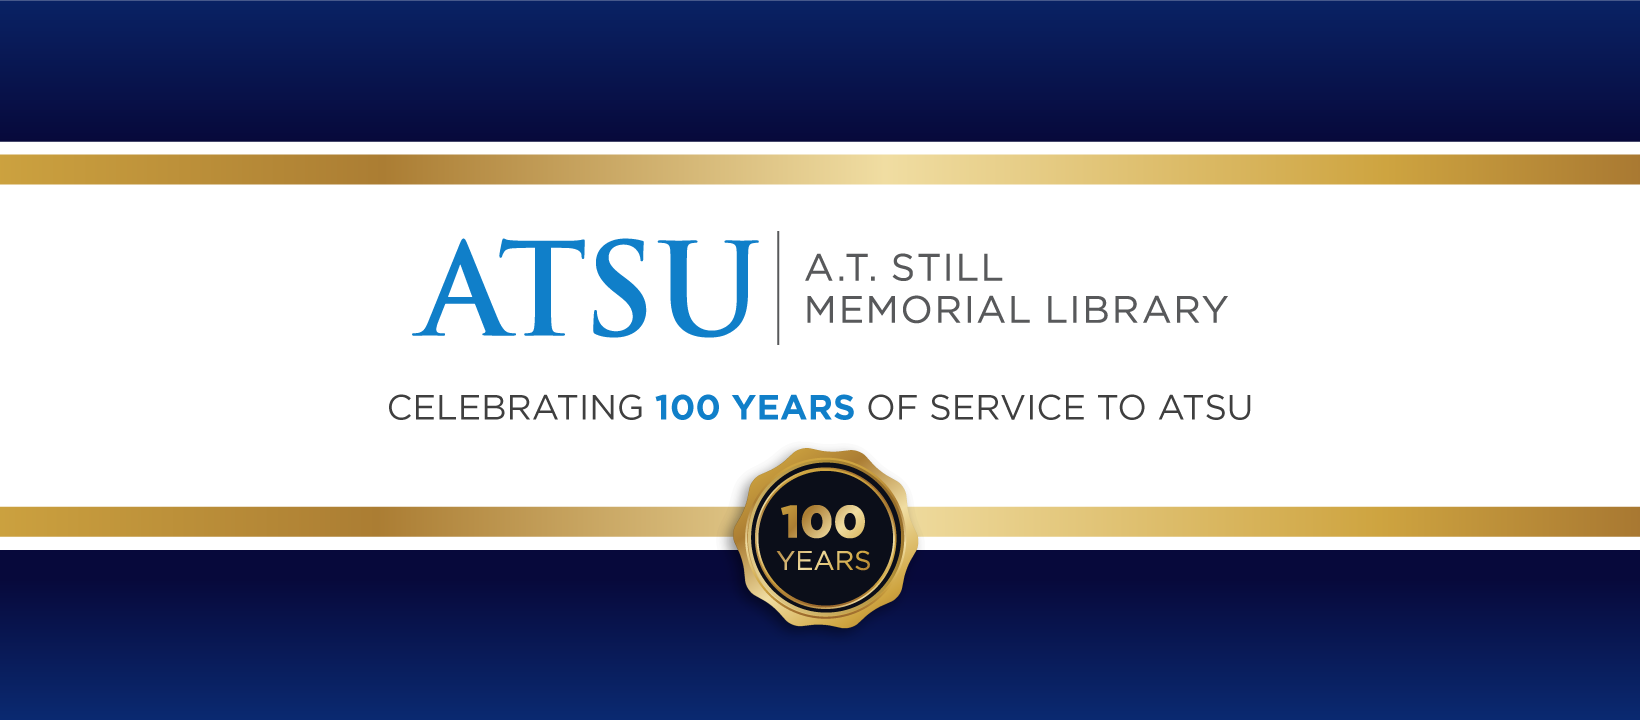 A.T. Still Memorial Library 100th Anniversary banner